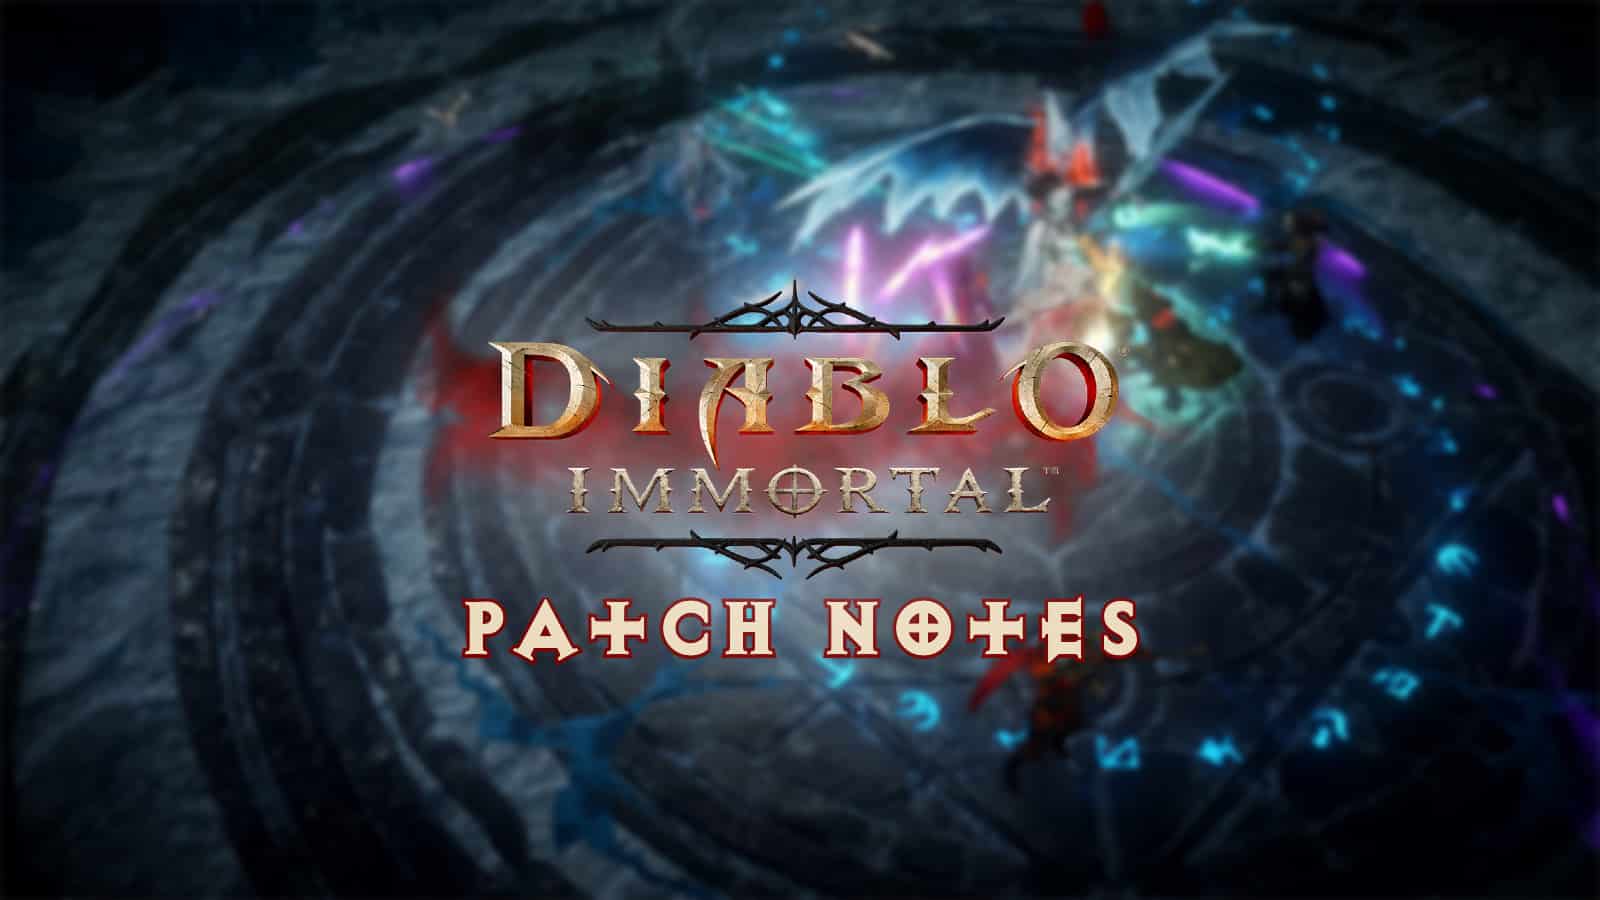 Diablo III Patch 2.0.6 Patch Notes and Hotfixes - Diablo III News